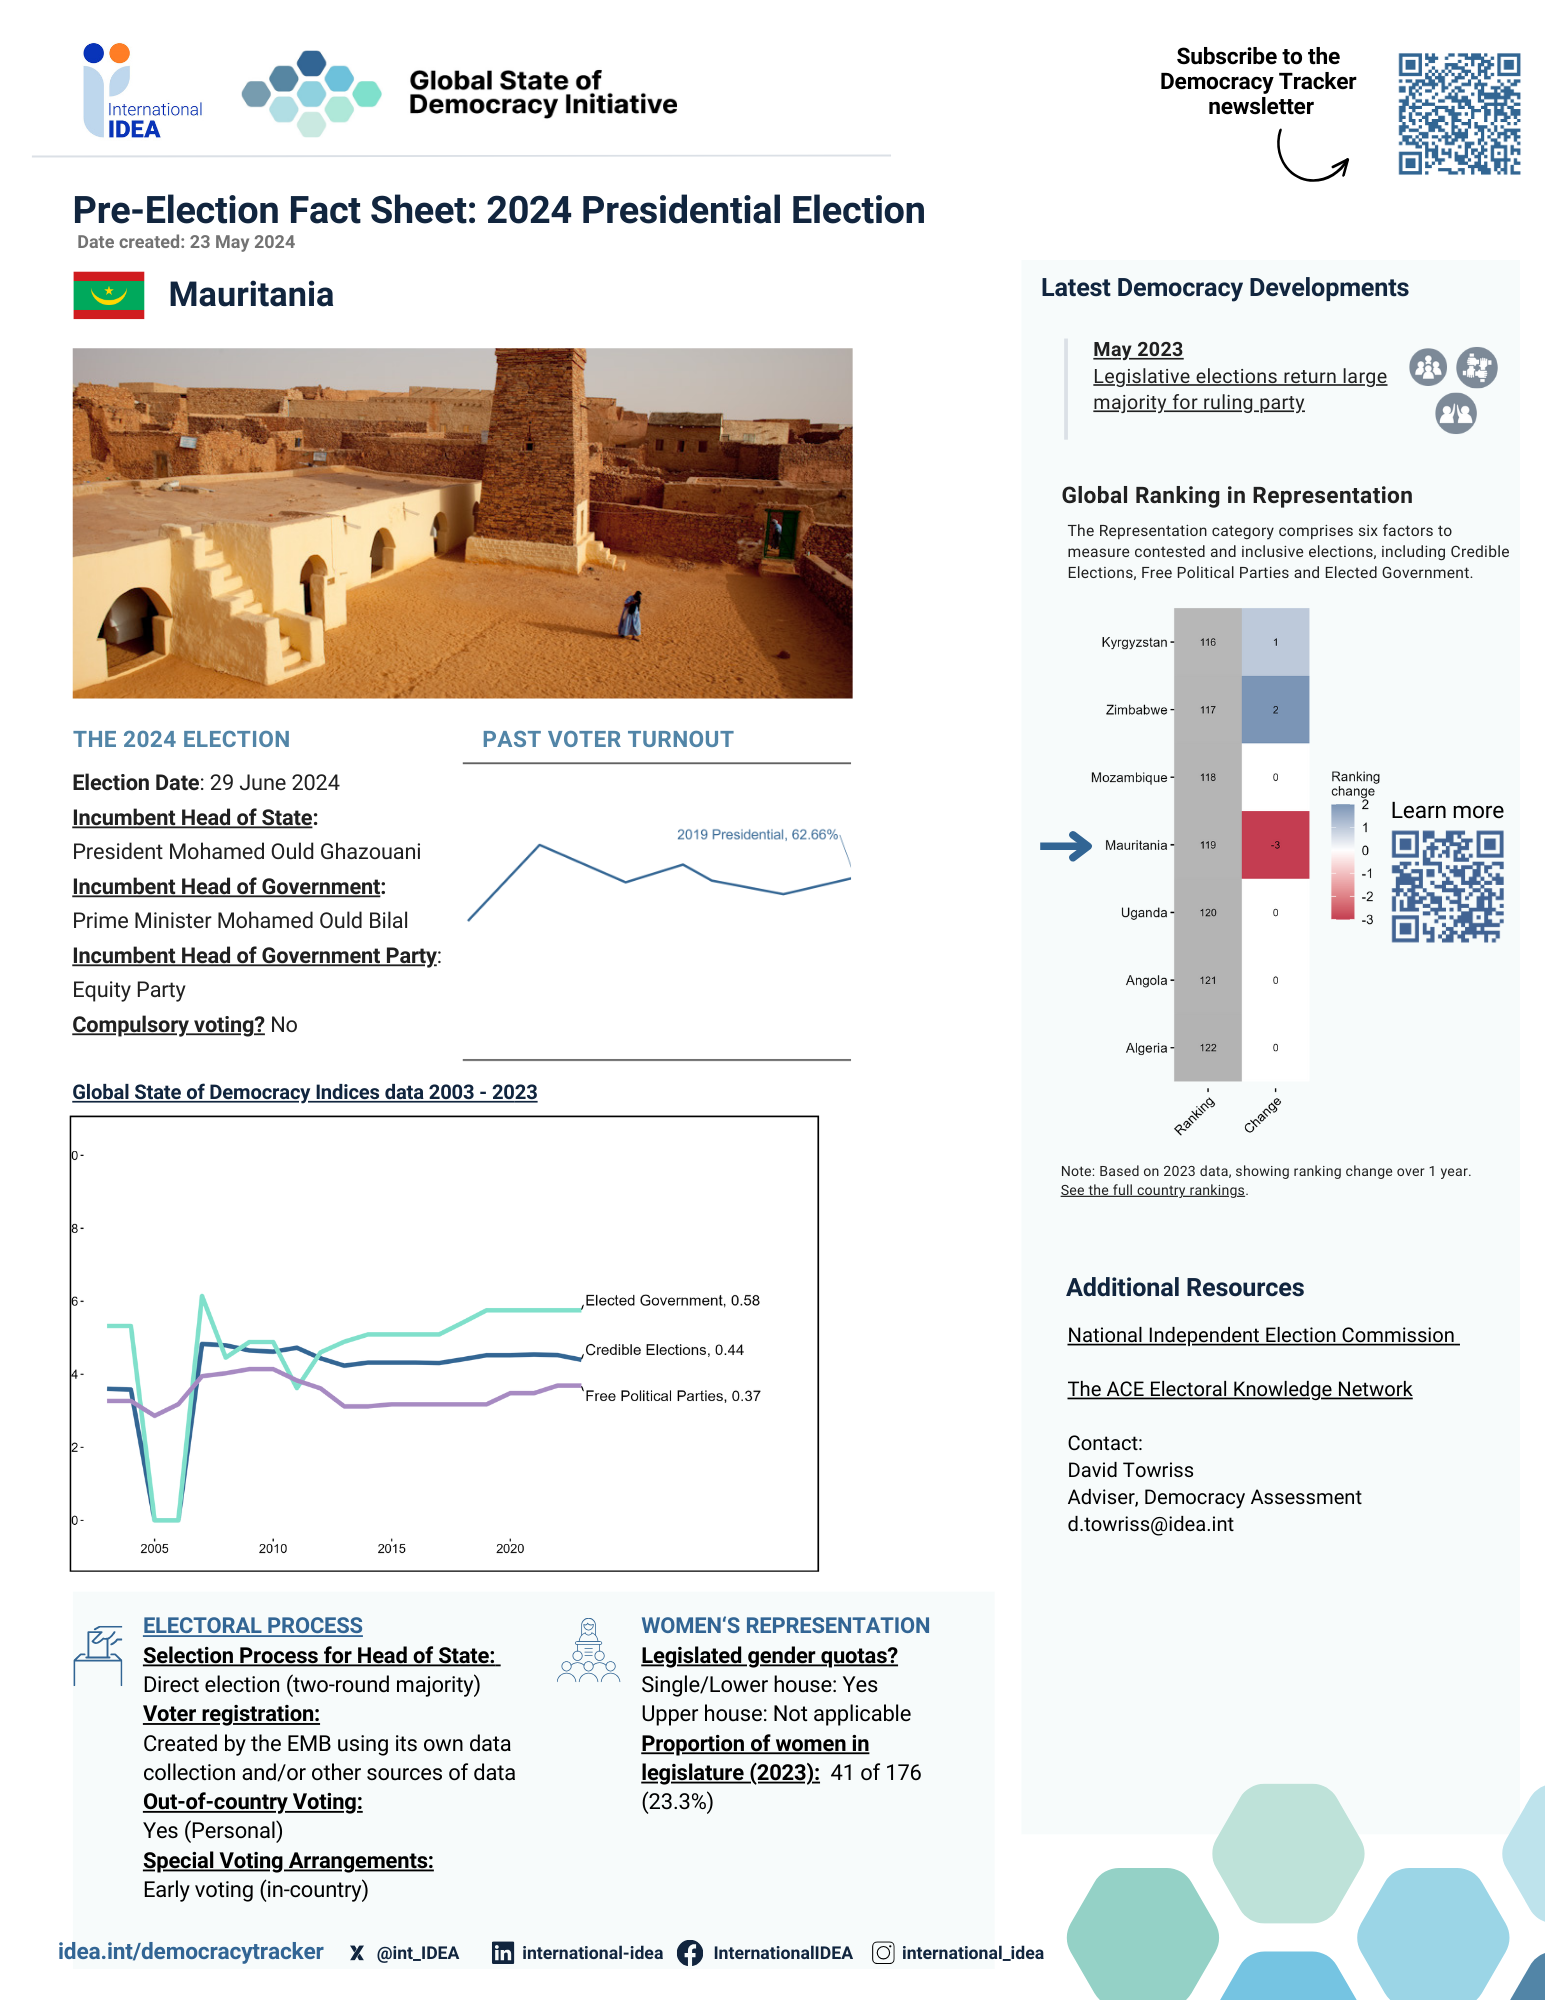 Pre-election Factsheet 2024 Mauritania